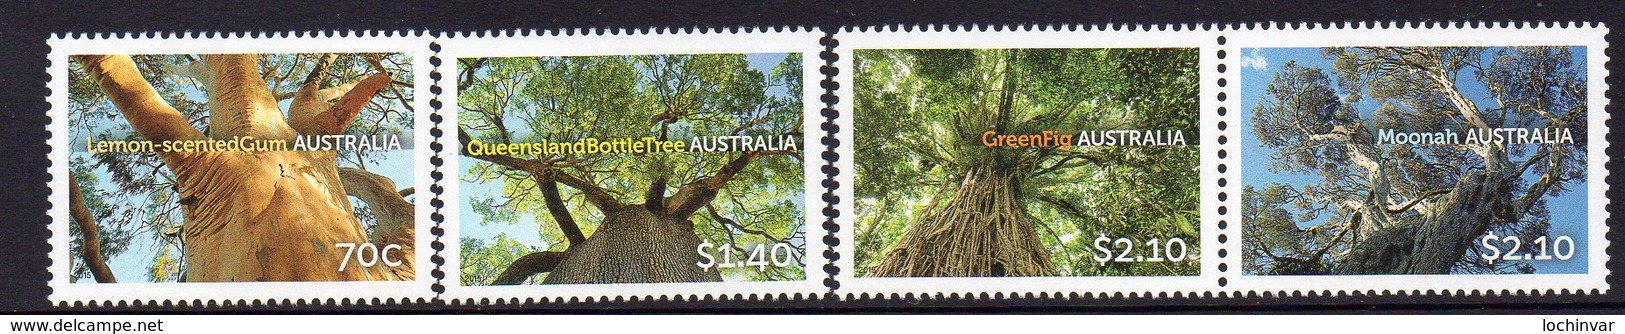 AUSTRALIA, 2015 TREES 4 MNH - Mint Stamps